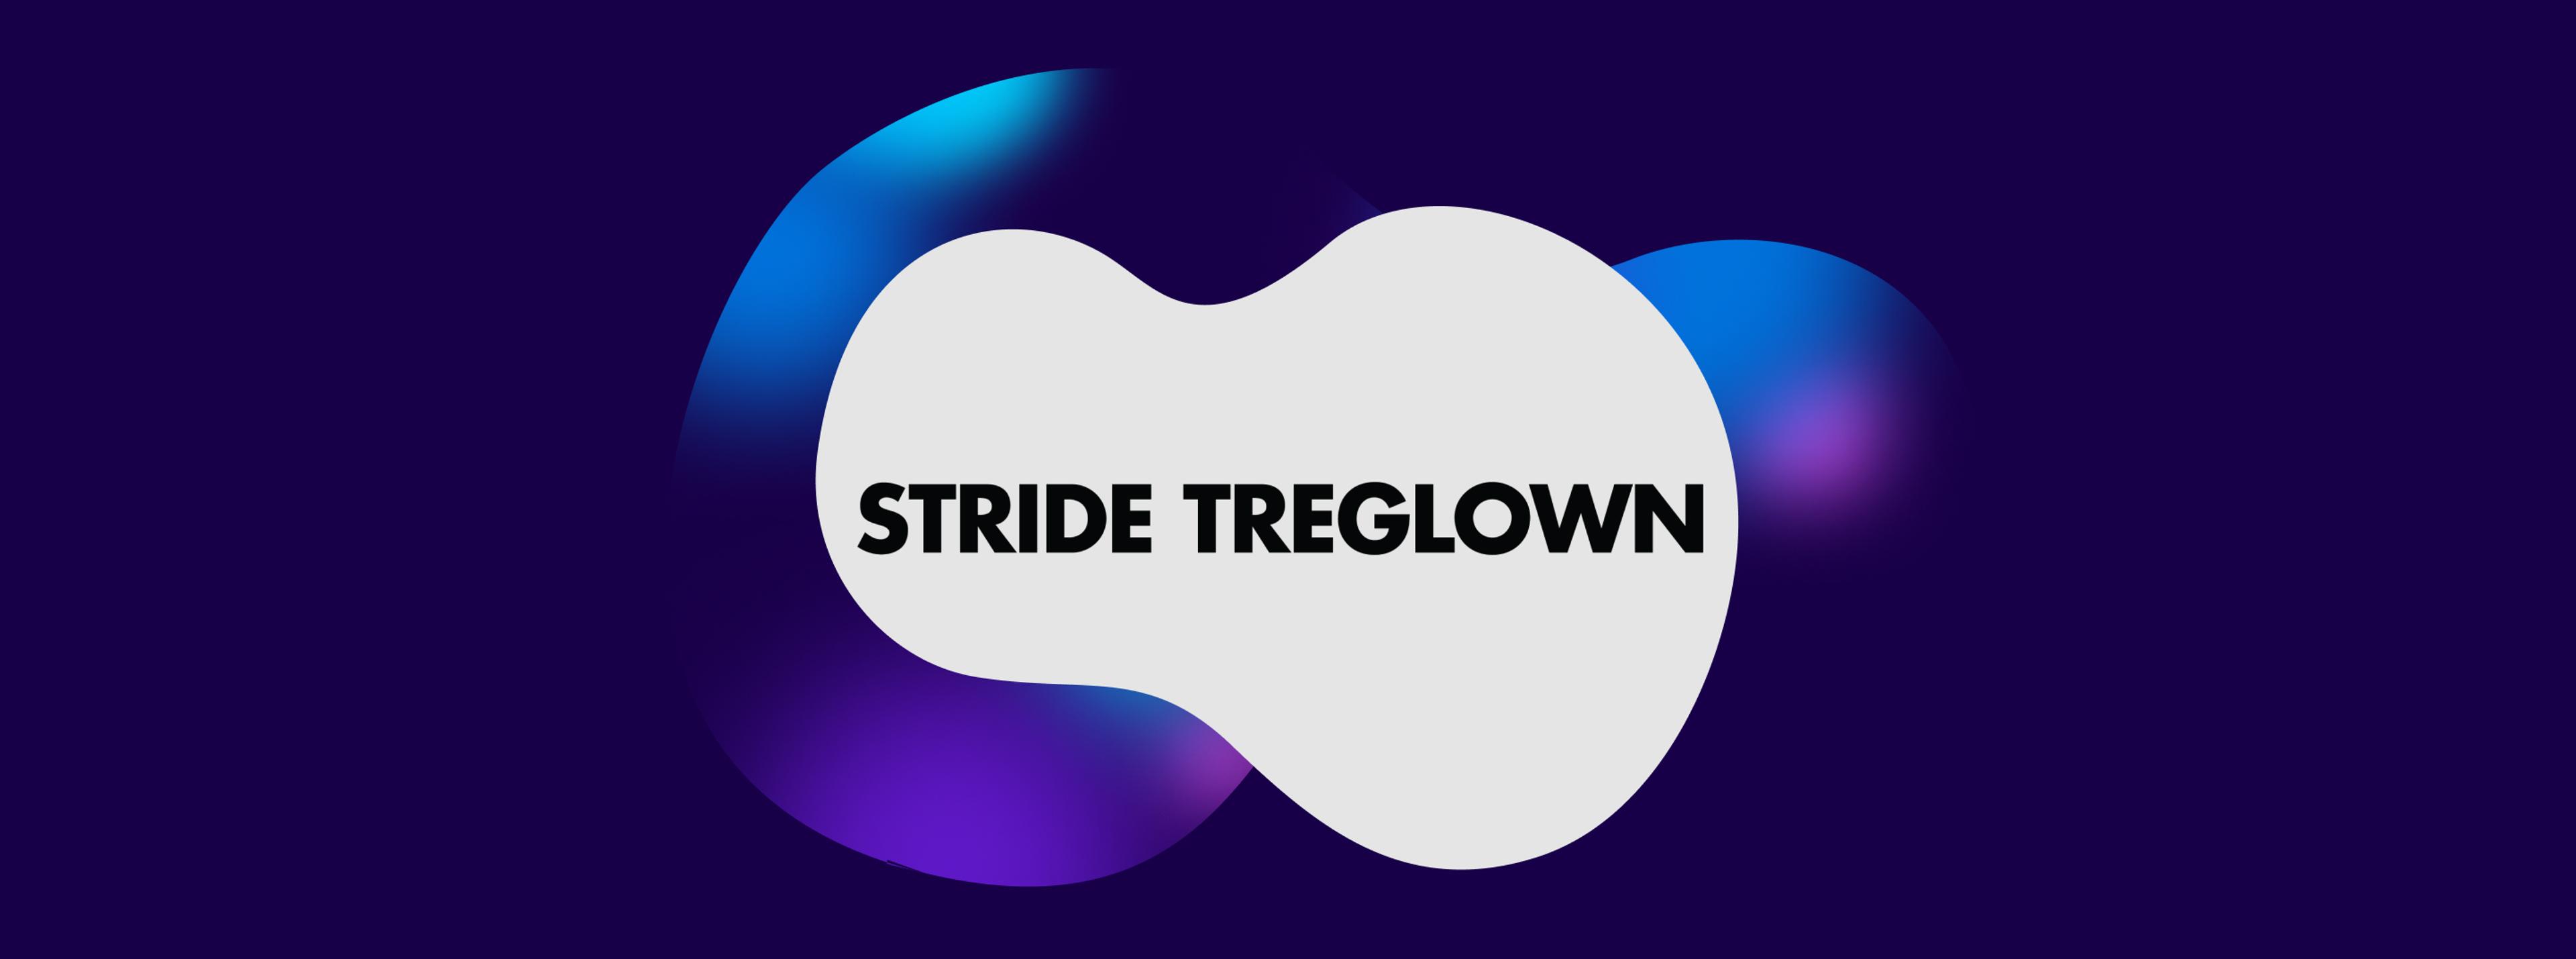 Stride Treglown logo on white background with a dark blue blob in the background